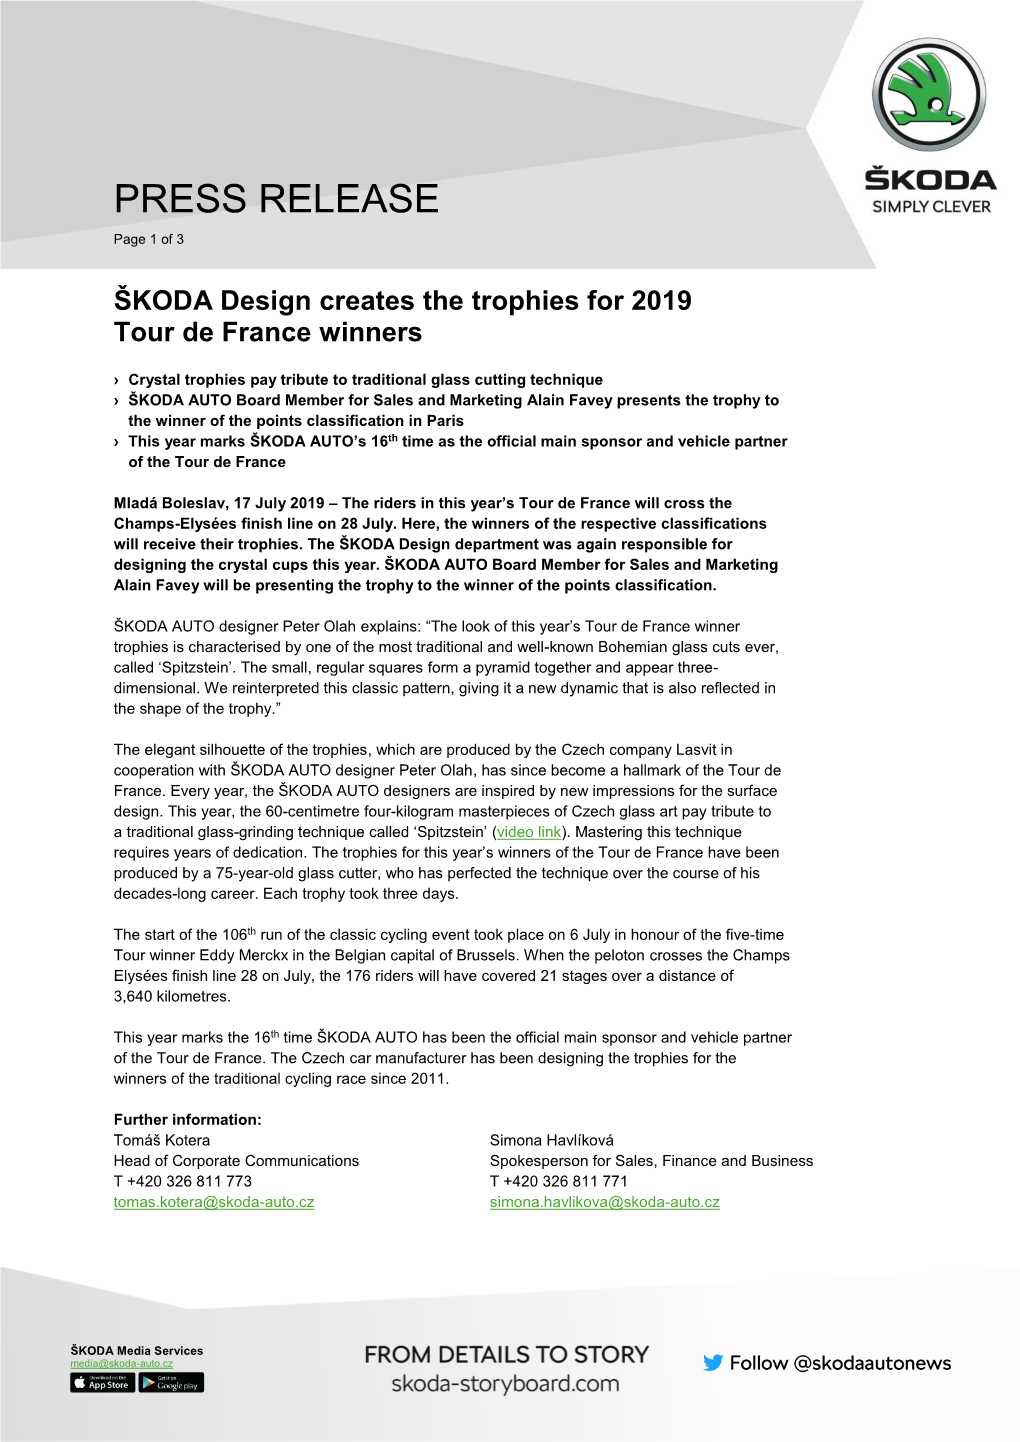 ŠKODA Design Creates the Trophies for 2019 Tour De France Winners